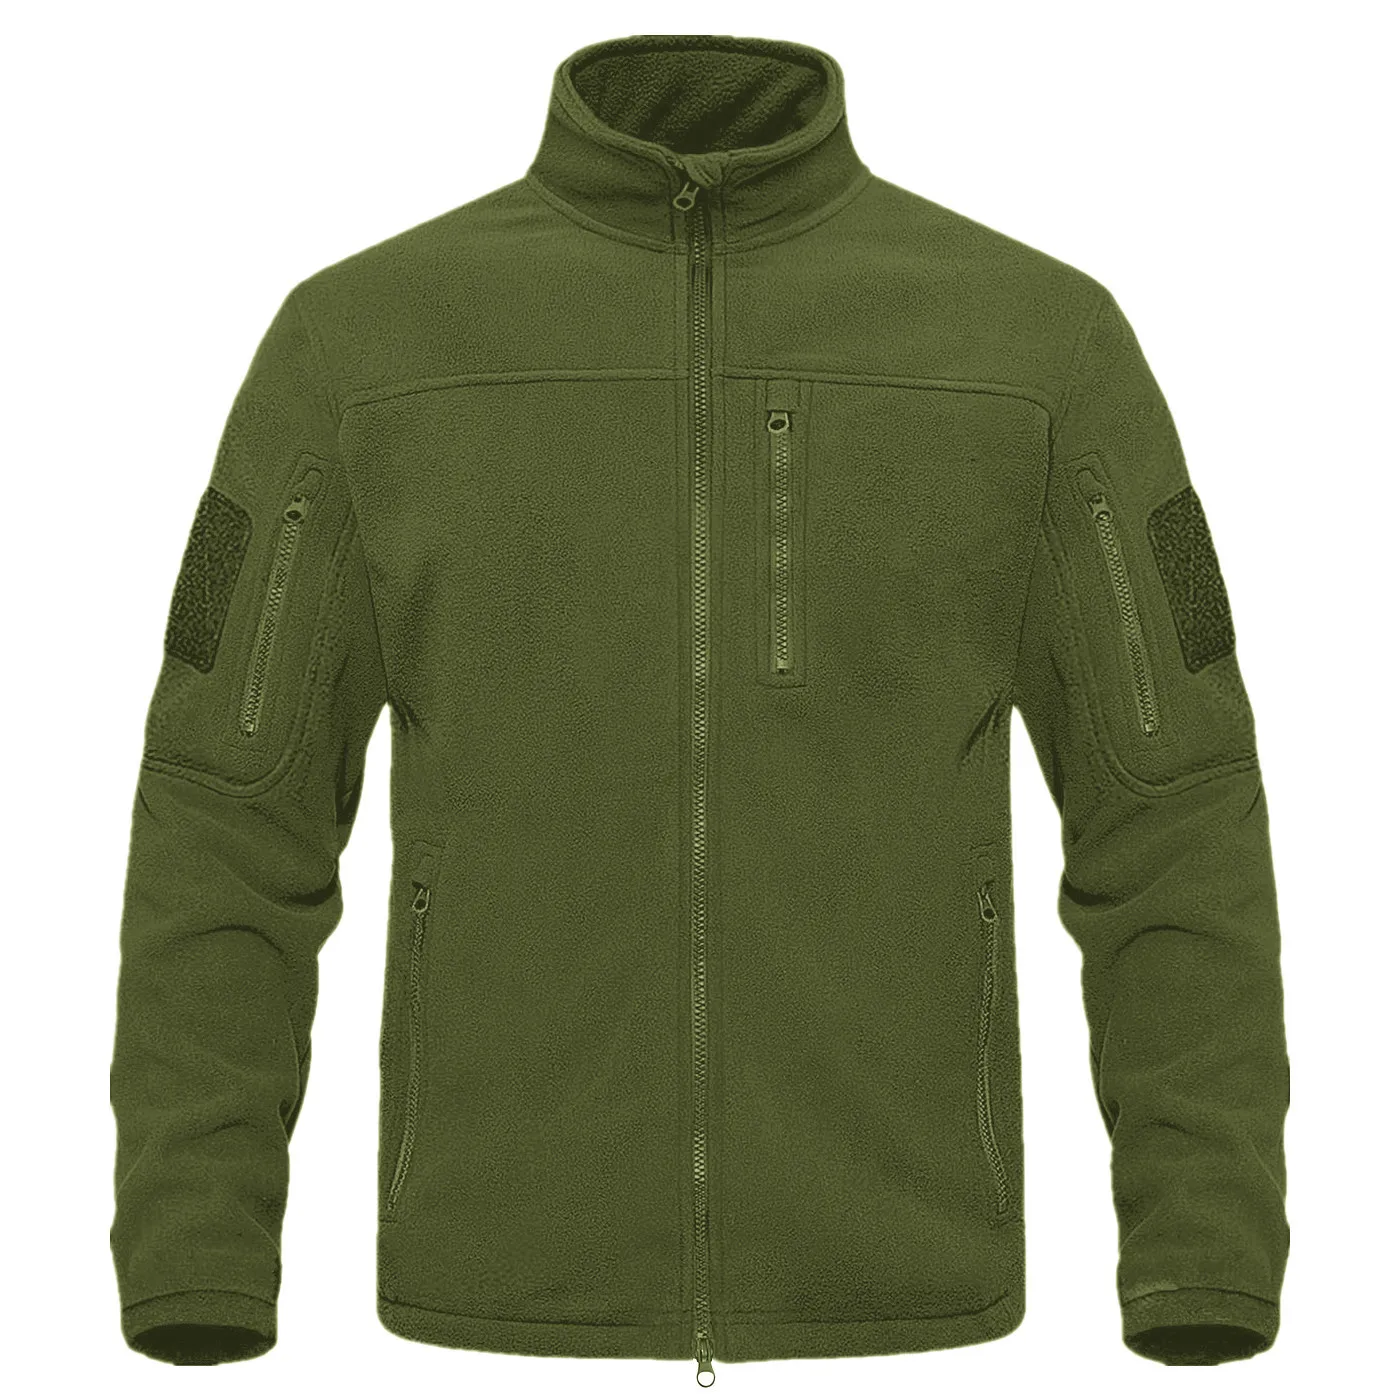 Army Sharkskin Softshell Outdoor Thermal Fleece Jacket Men's Outdoor Hiking Camping Windbreaker Hunting Jacket